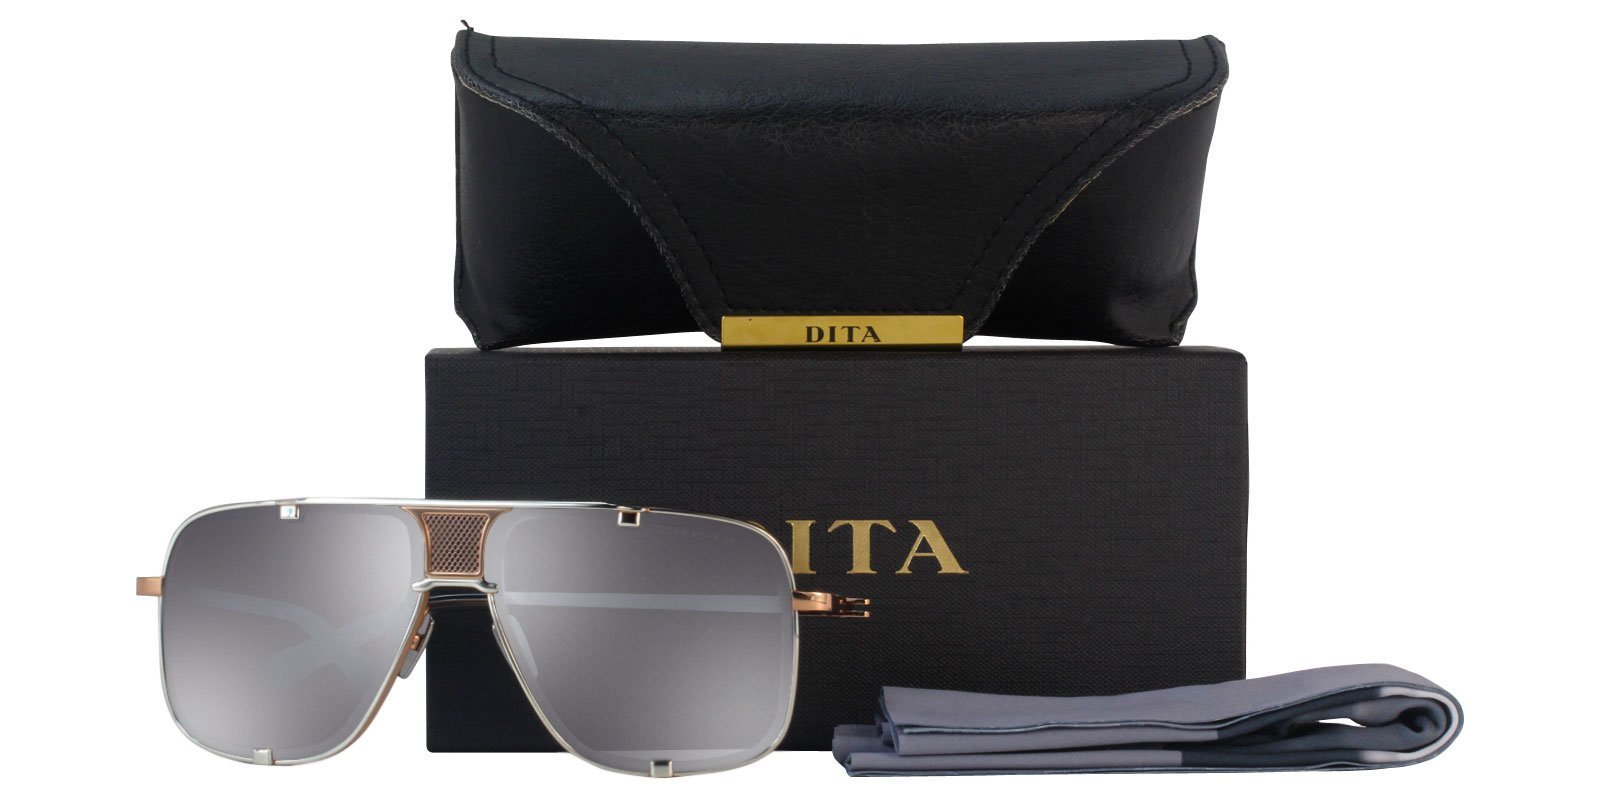 Dita Mach-Five Limited Edition Sunglasses - Designer Eyes Blog